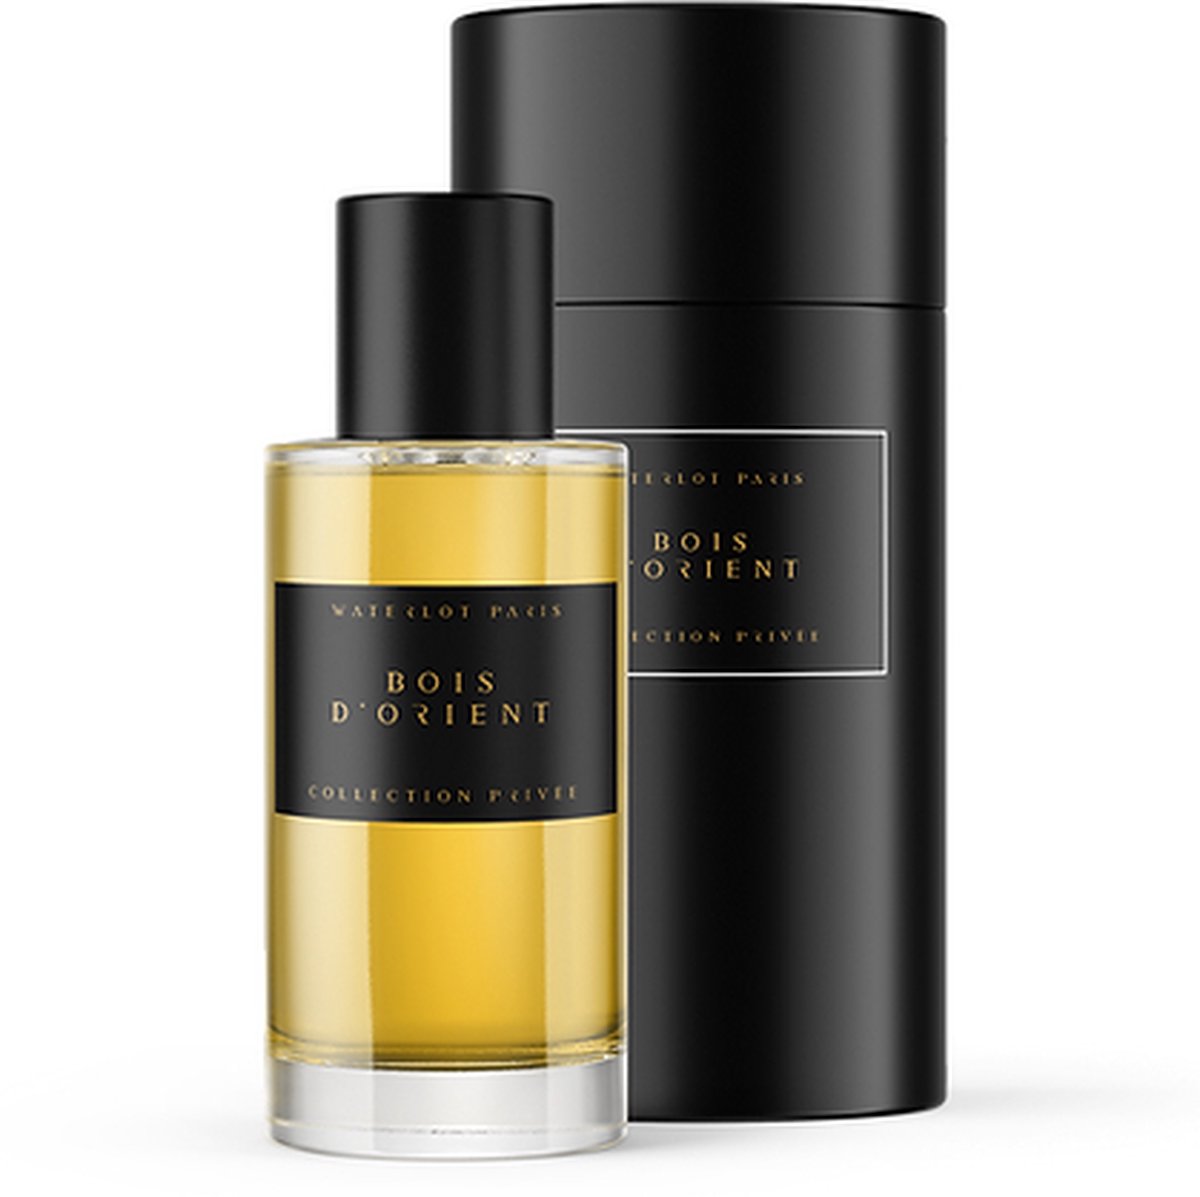 Waterlot Paris Bois d'Orient - privécollectie parfum - bes, abrikoos - unisex - Amber, Muskus - poederachtige tonen 50ml